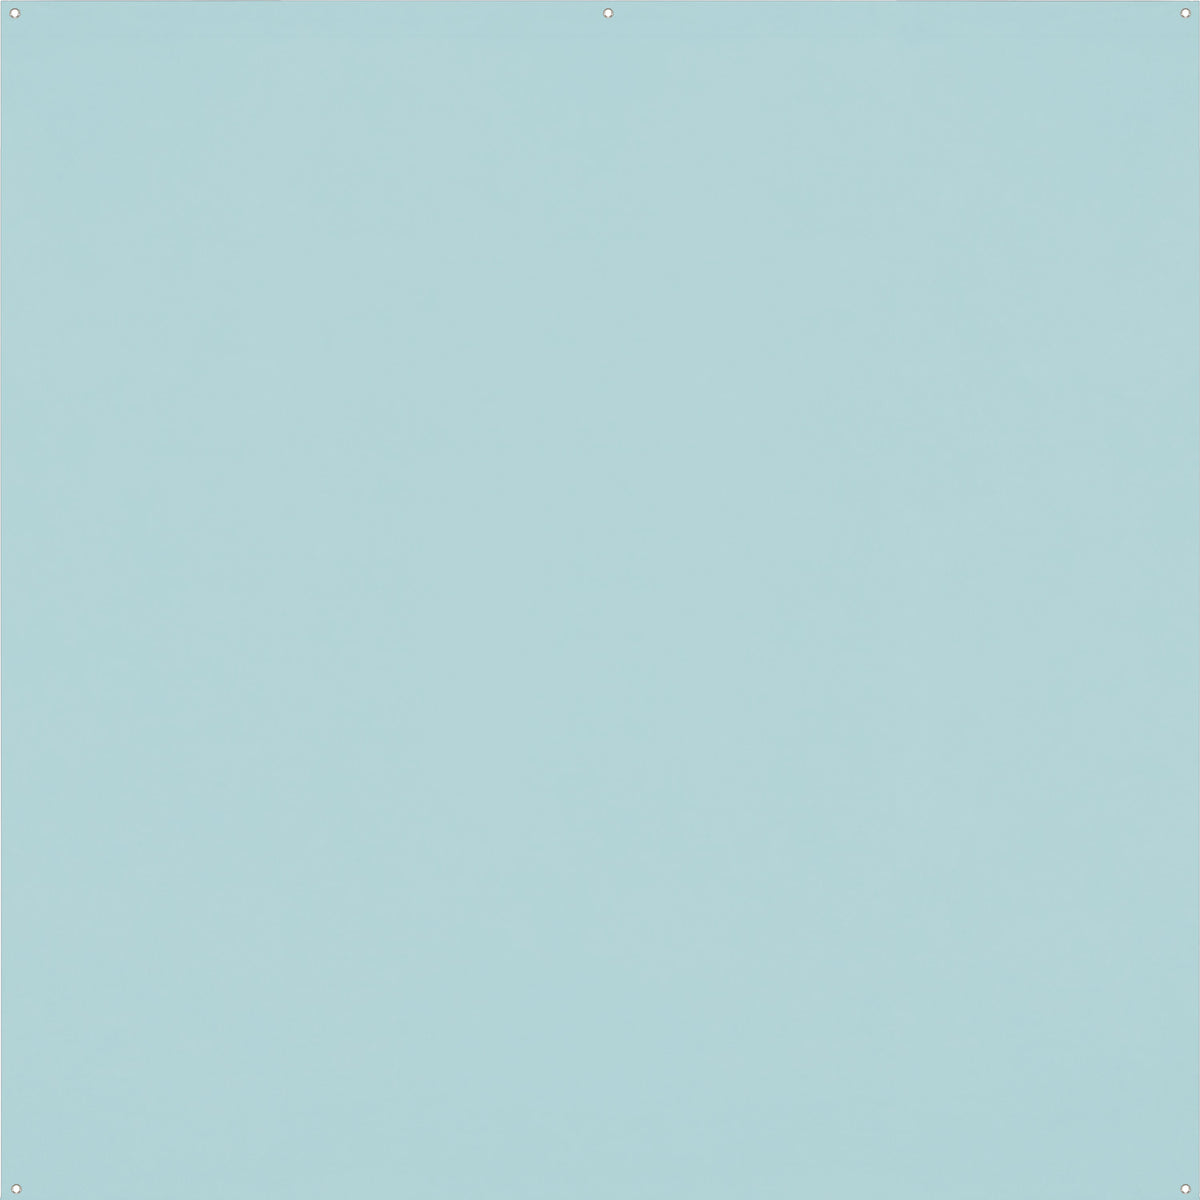 X-Drop Pro Wrinkle-Resistant Backdrop - Pastel Blue (8' x 8')